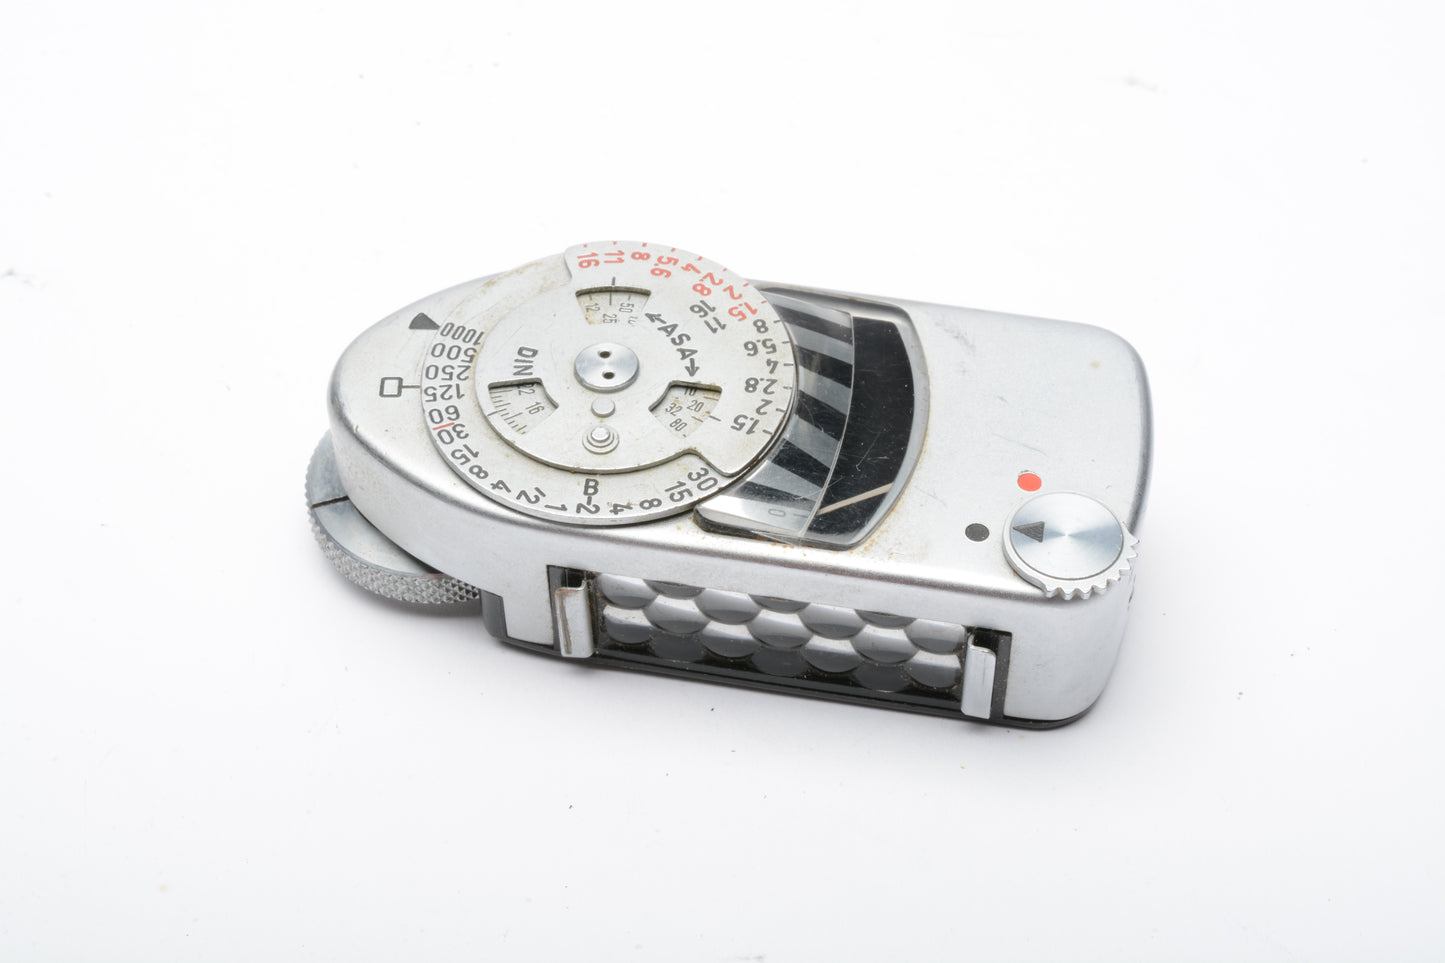 Leica Meter MC light meter, Parts only